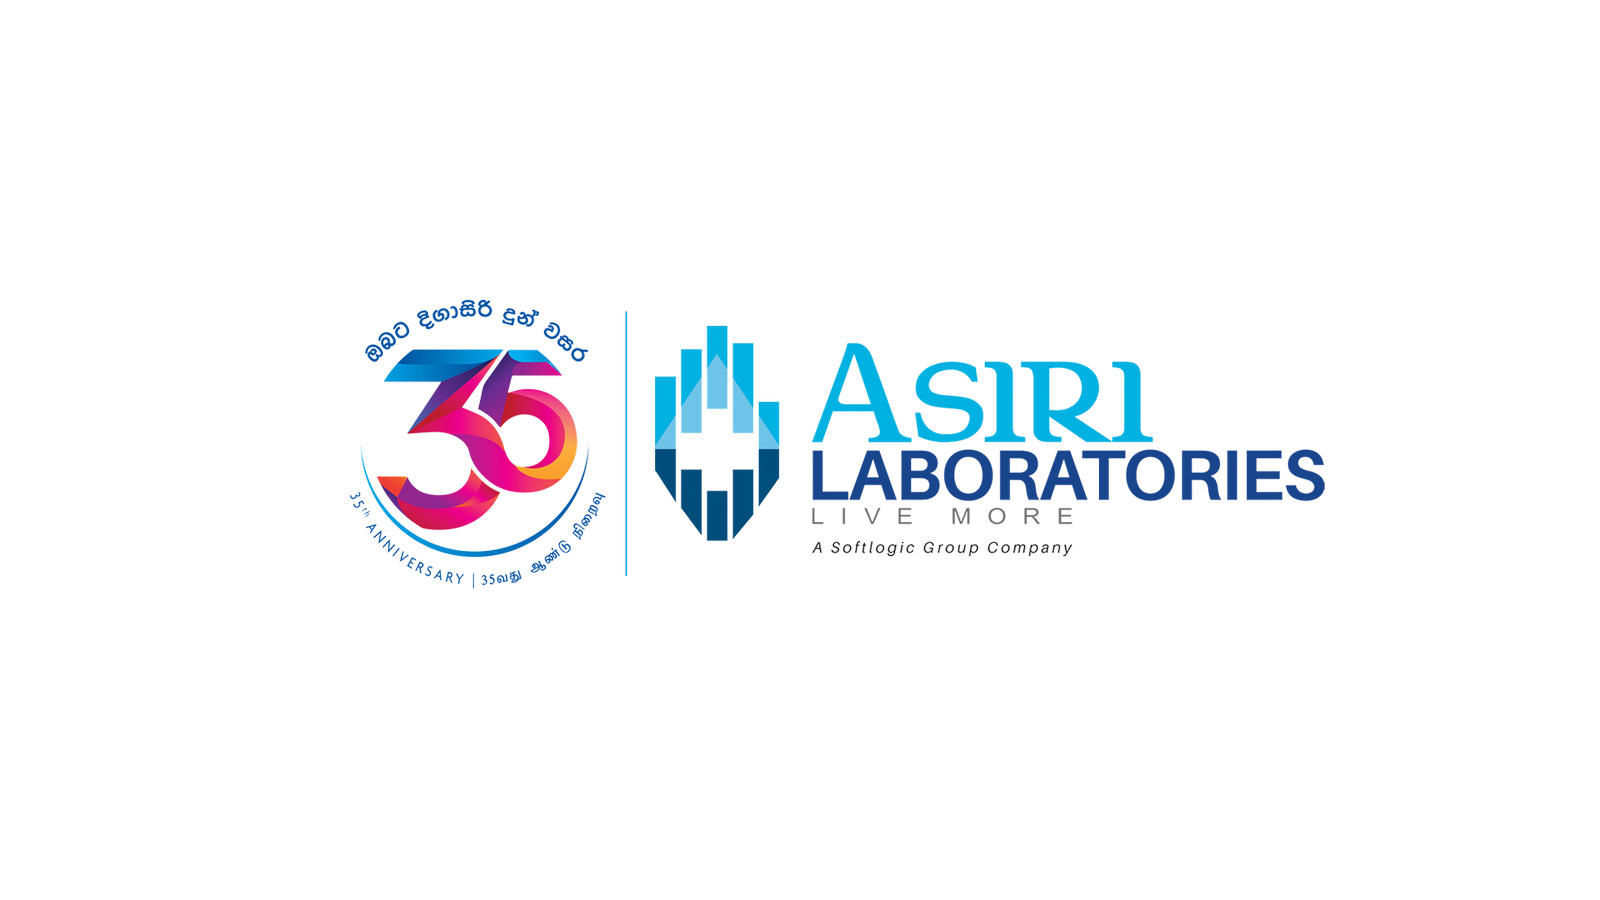 Asiri Laboratories - part of Asiri Hospital Holdings PLC